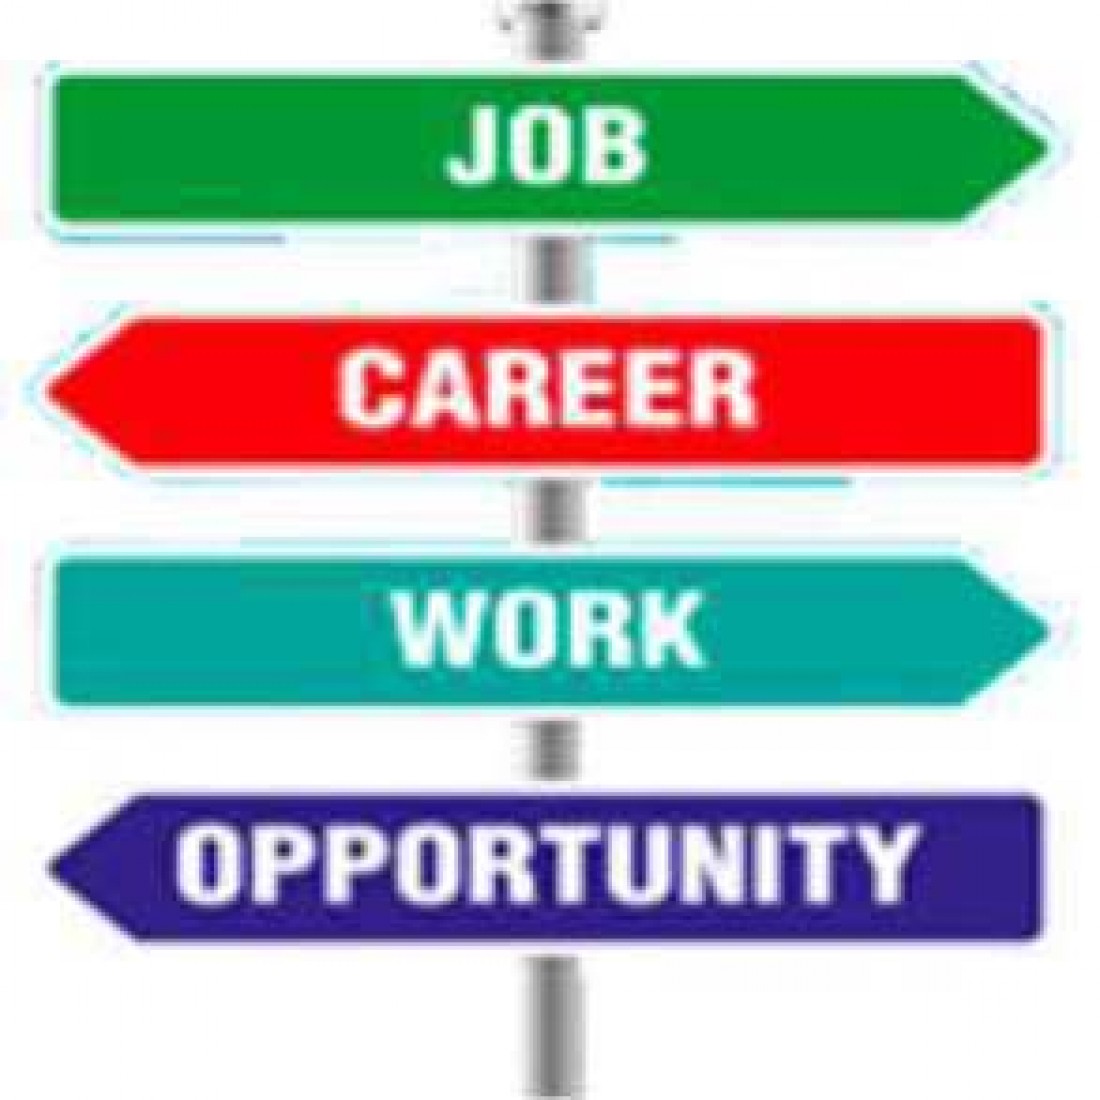 Job / Career